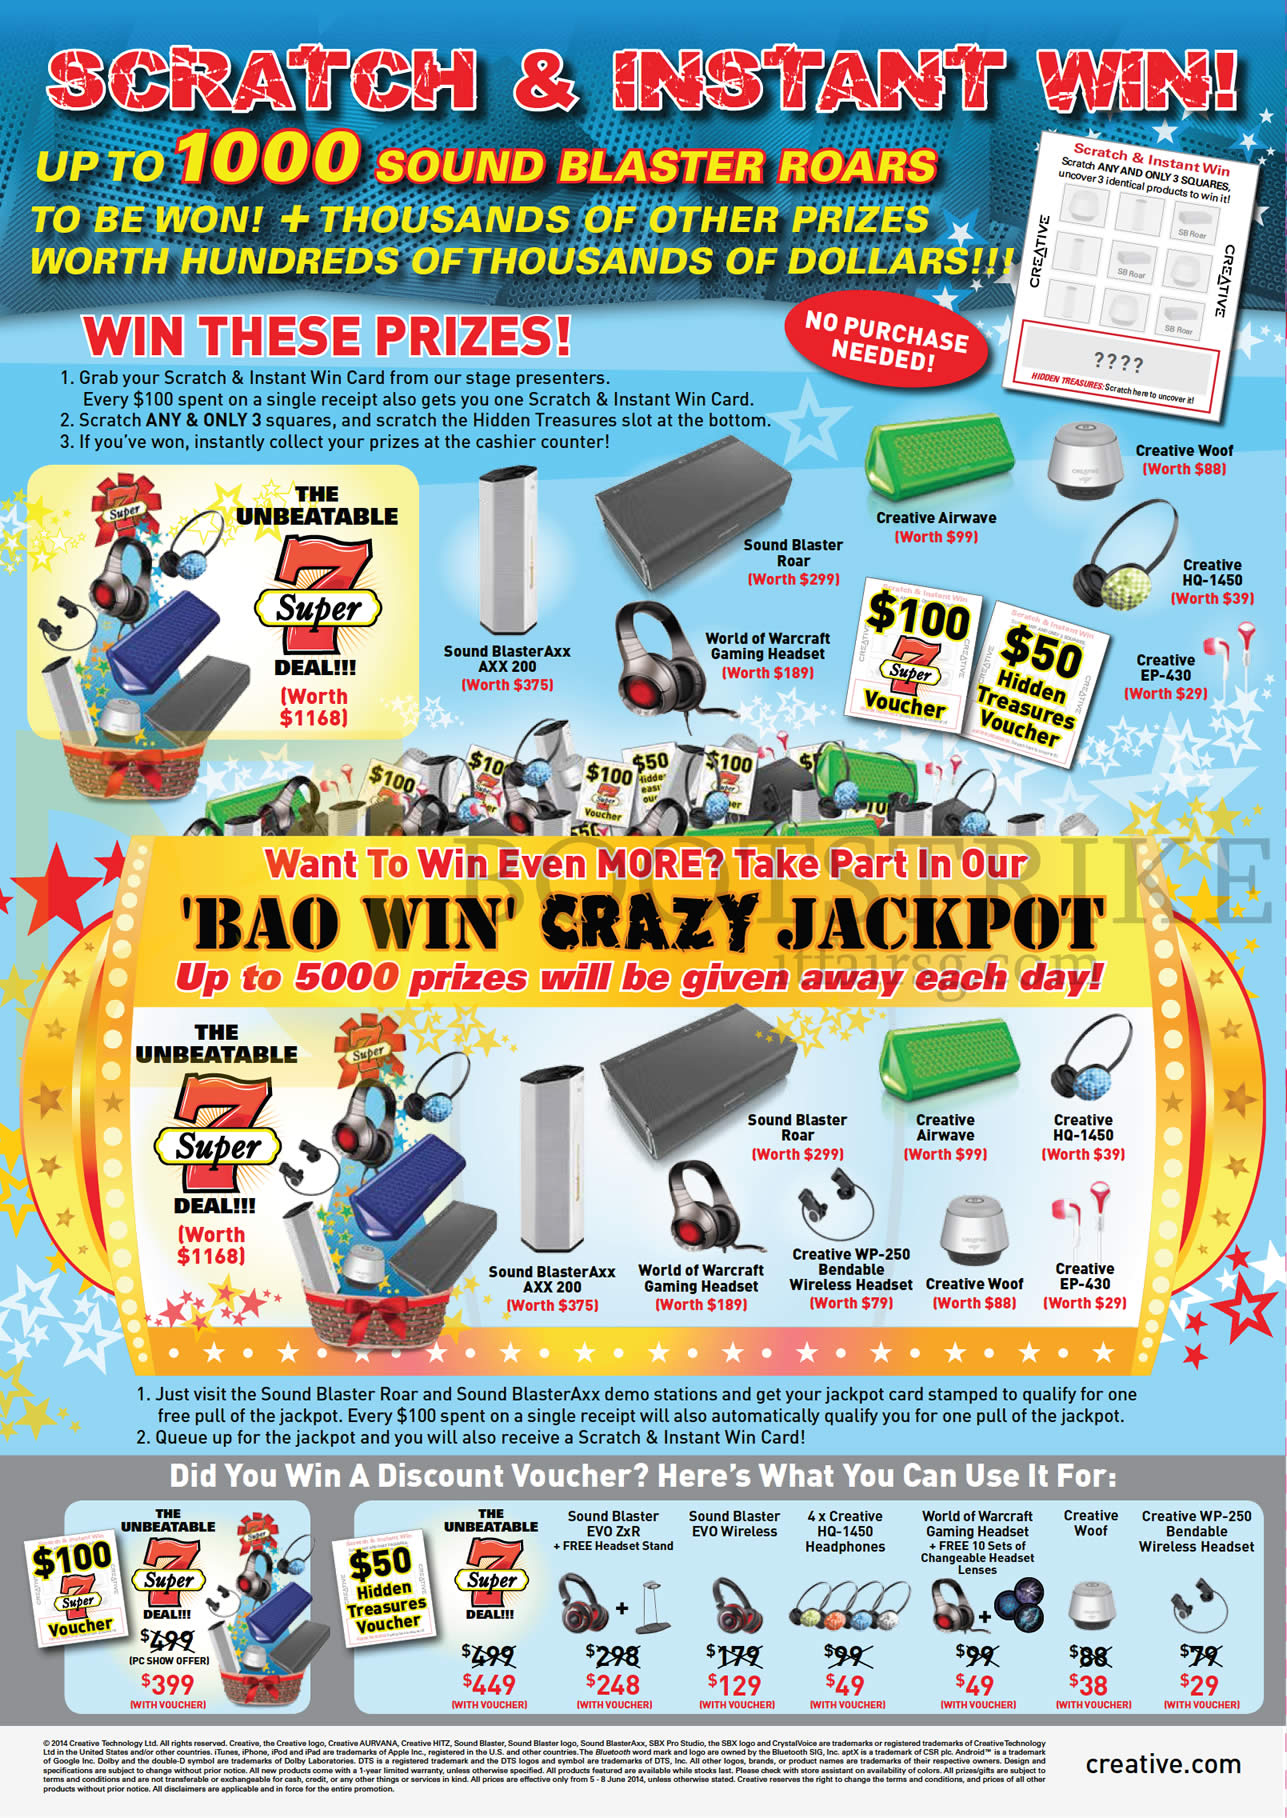 PC SHOW 2014 price list image brochure of Creative Bao Win Crazy Jackpot, Scratch N Win